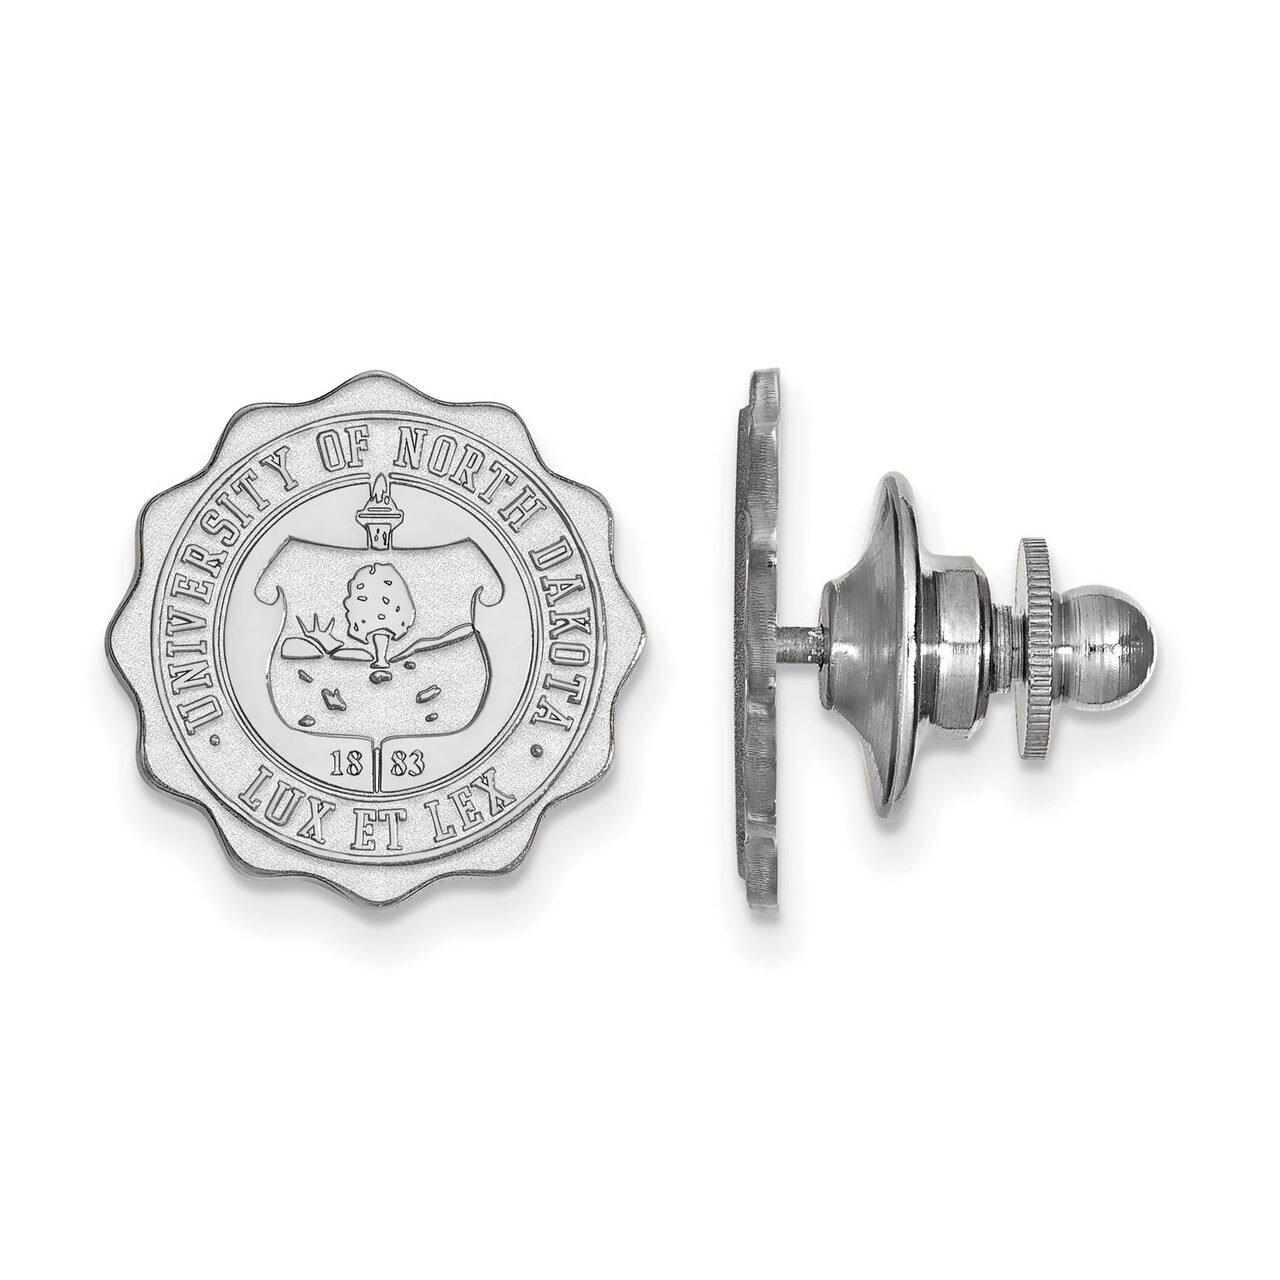 University of North Dakota Crest Lapel Pin Sterling Silver SS030UNOD